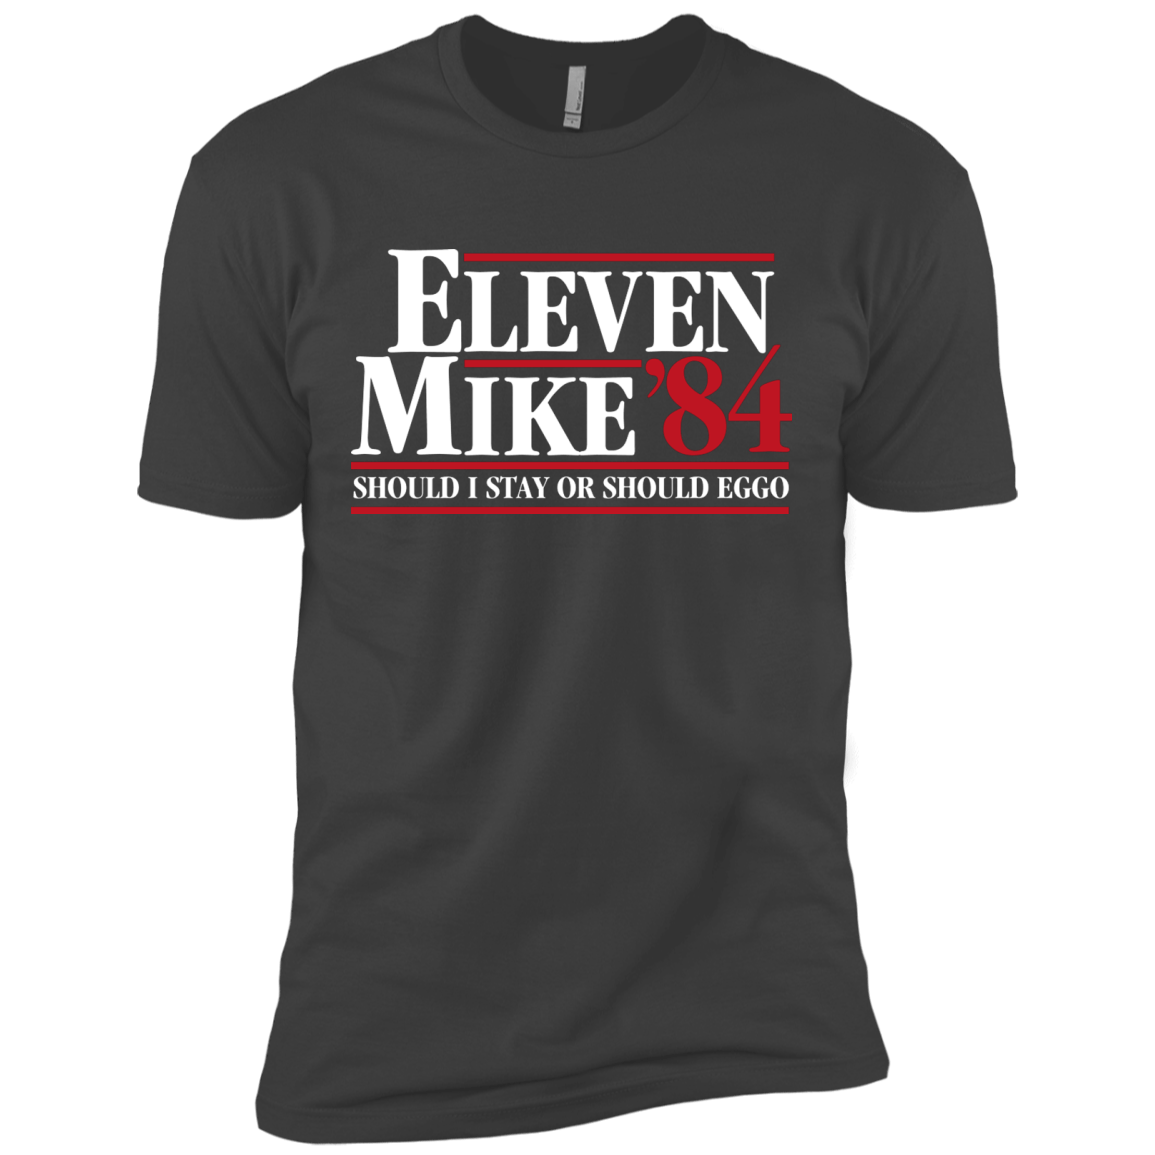 T-Shirts Heavy Metal / X-Small Eleven Mike 84 - Should I Stay or Should Eggo Men's Premium T-Shirt